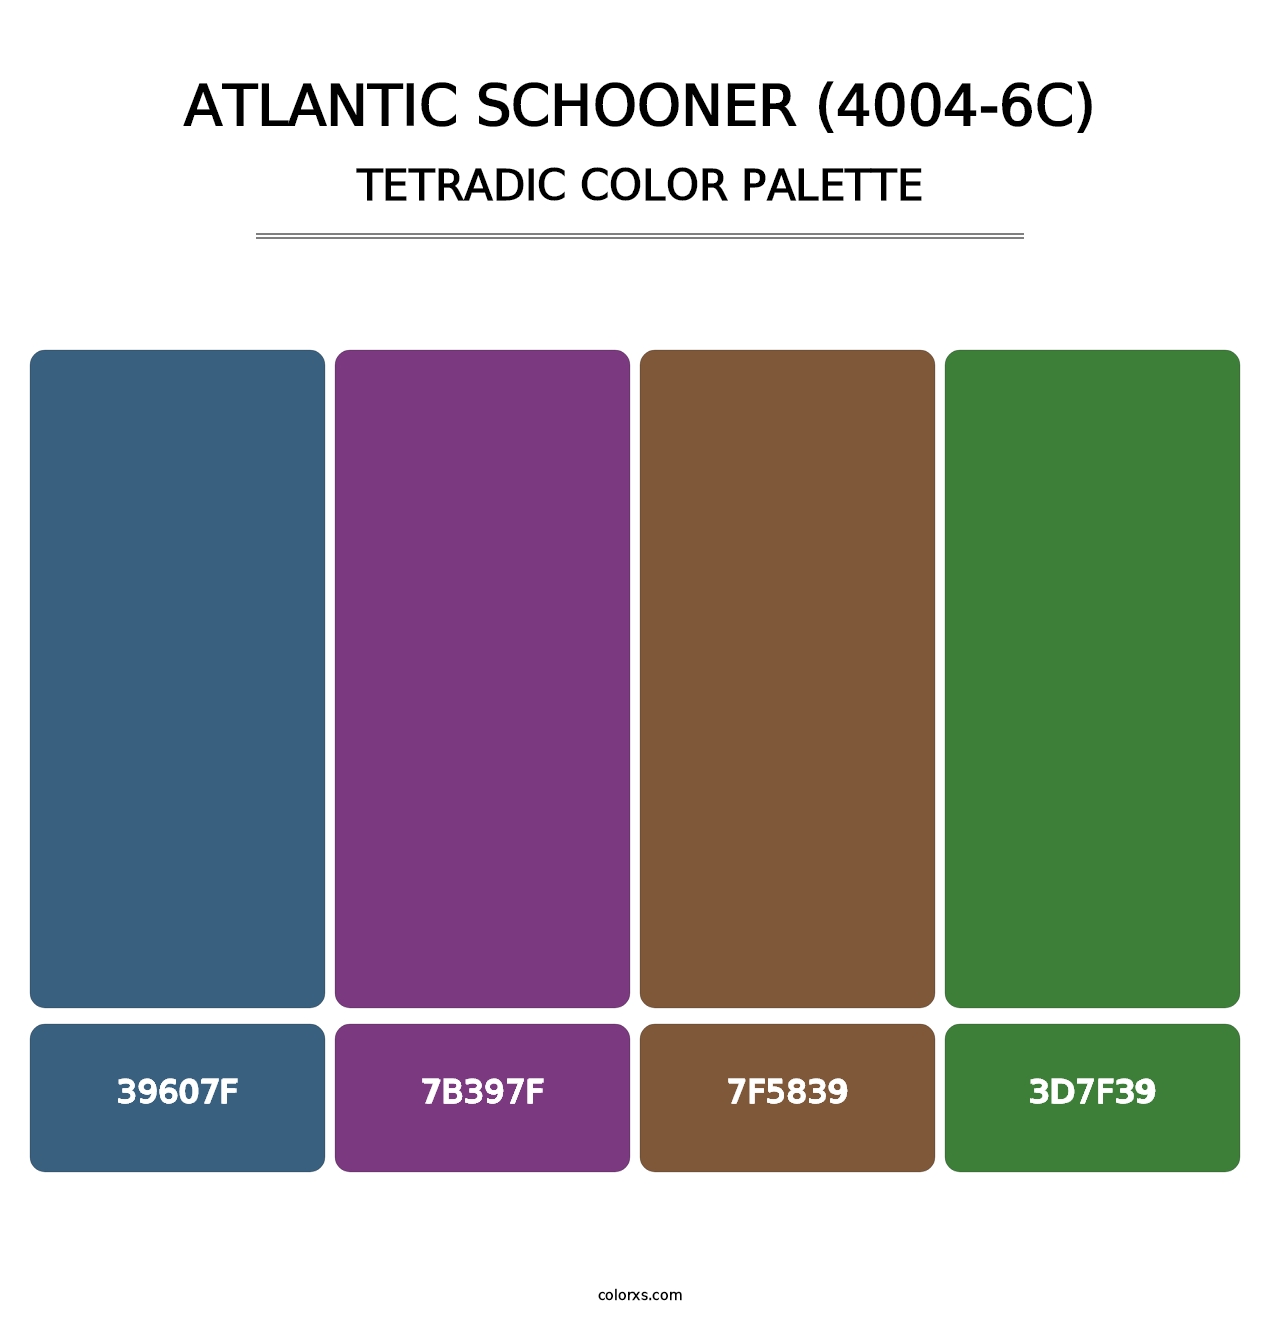 Atlantic Schooner (4004-6C) - Tetradic Color Palette